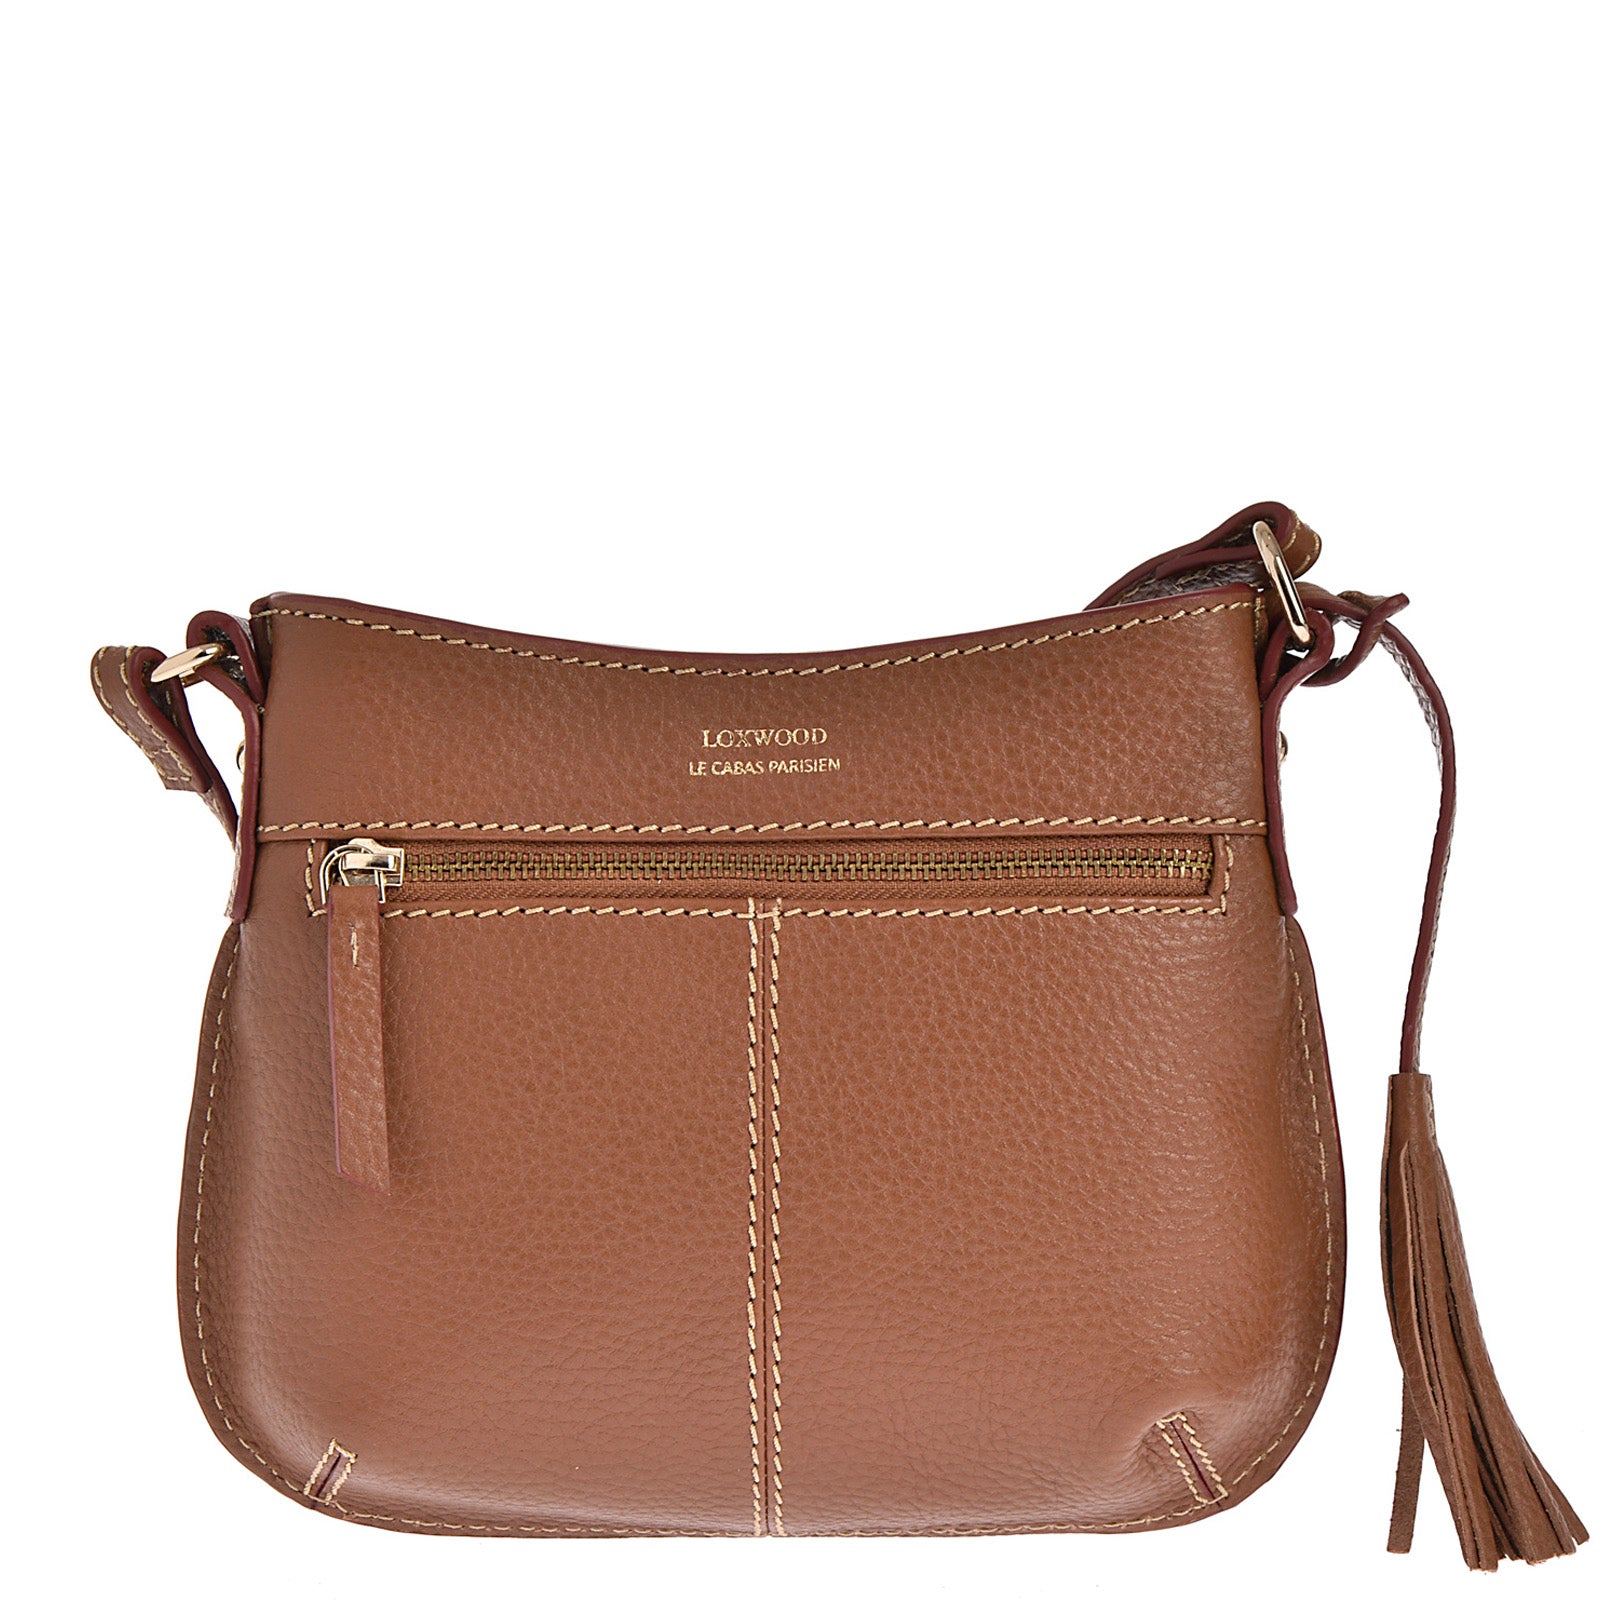 MINI CELIA - Small grained leather messenger bag